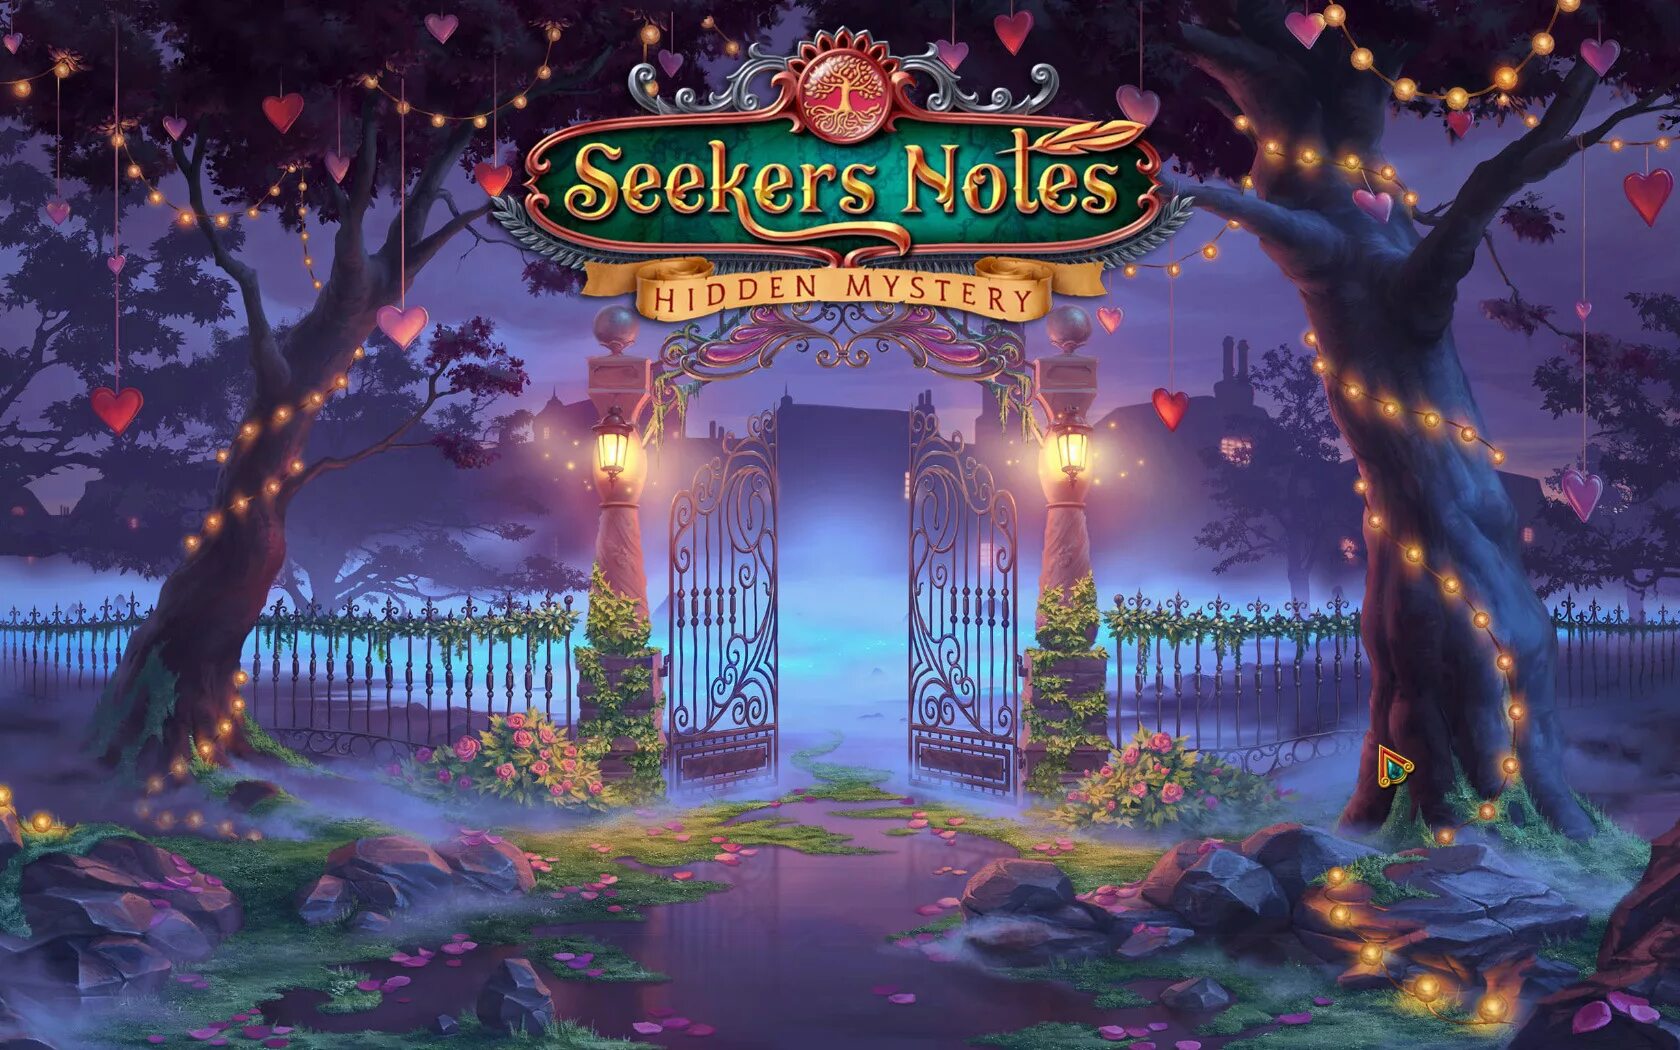 Seeker's notes. Seekers Notes тайны. Seekers Notes hidden Mystery локации. Дарквуд Записки искателя. Игра Записки искателя.